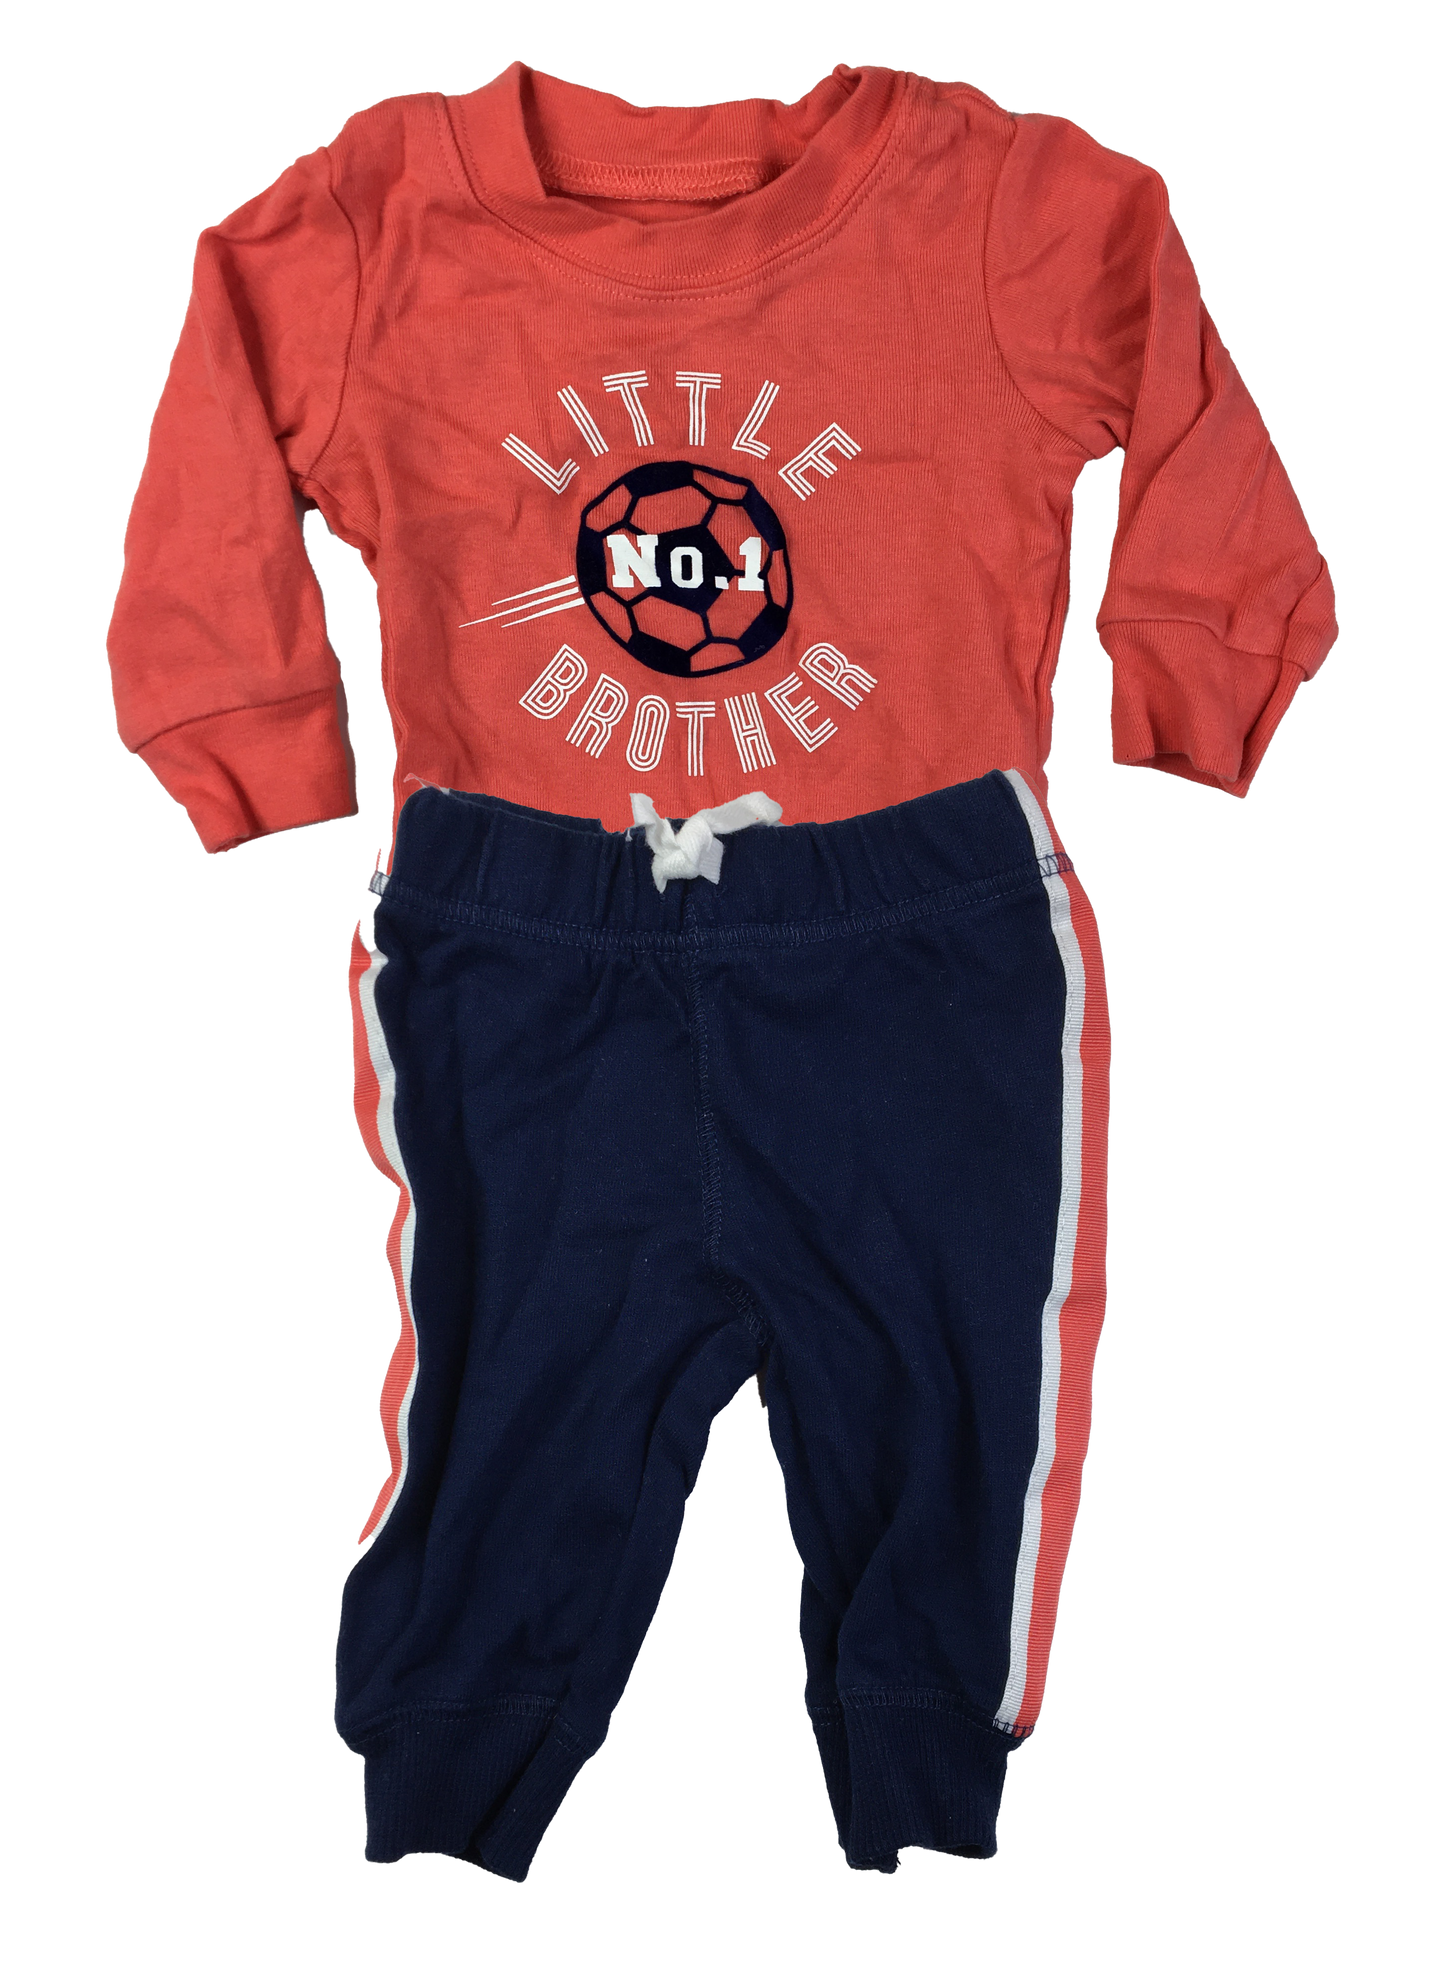 Carter's 2-Piece Orange Top & Navy Pants "Little Brother"  3M